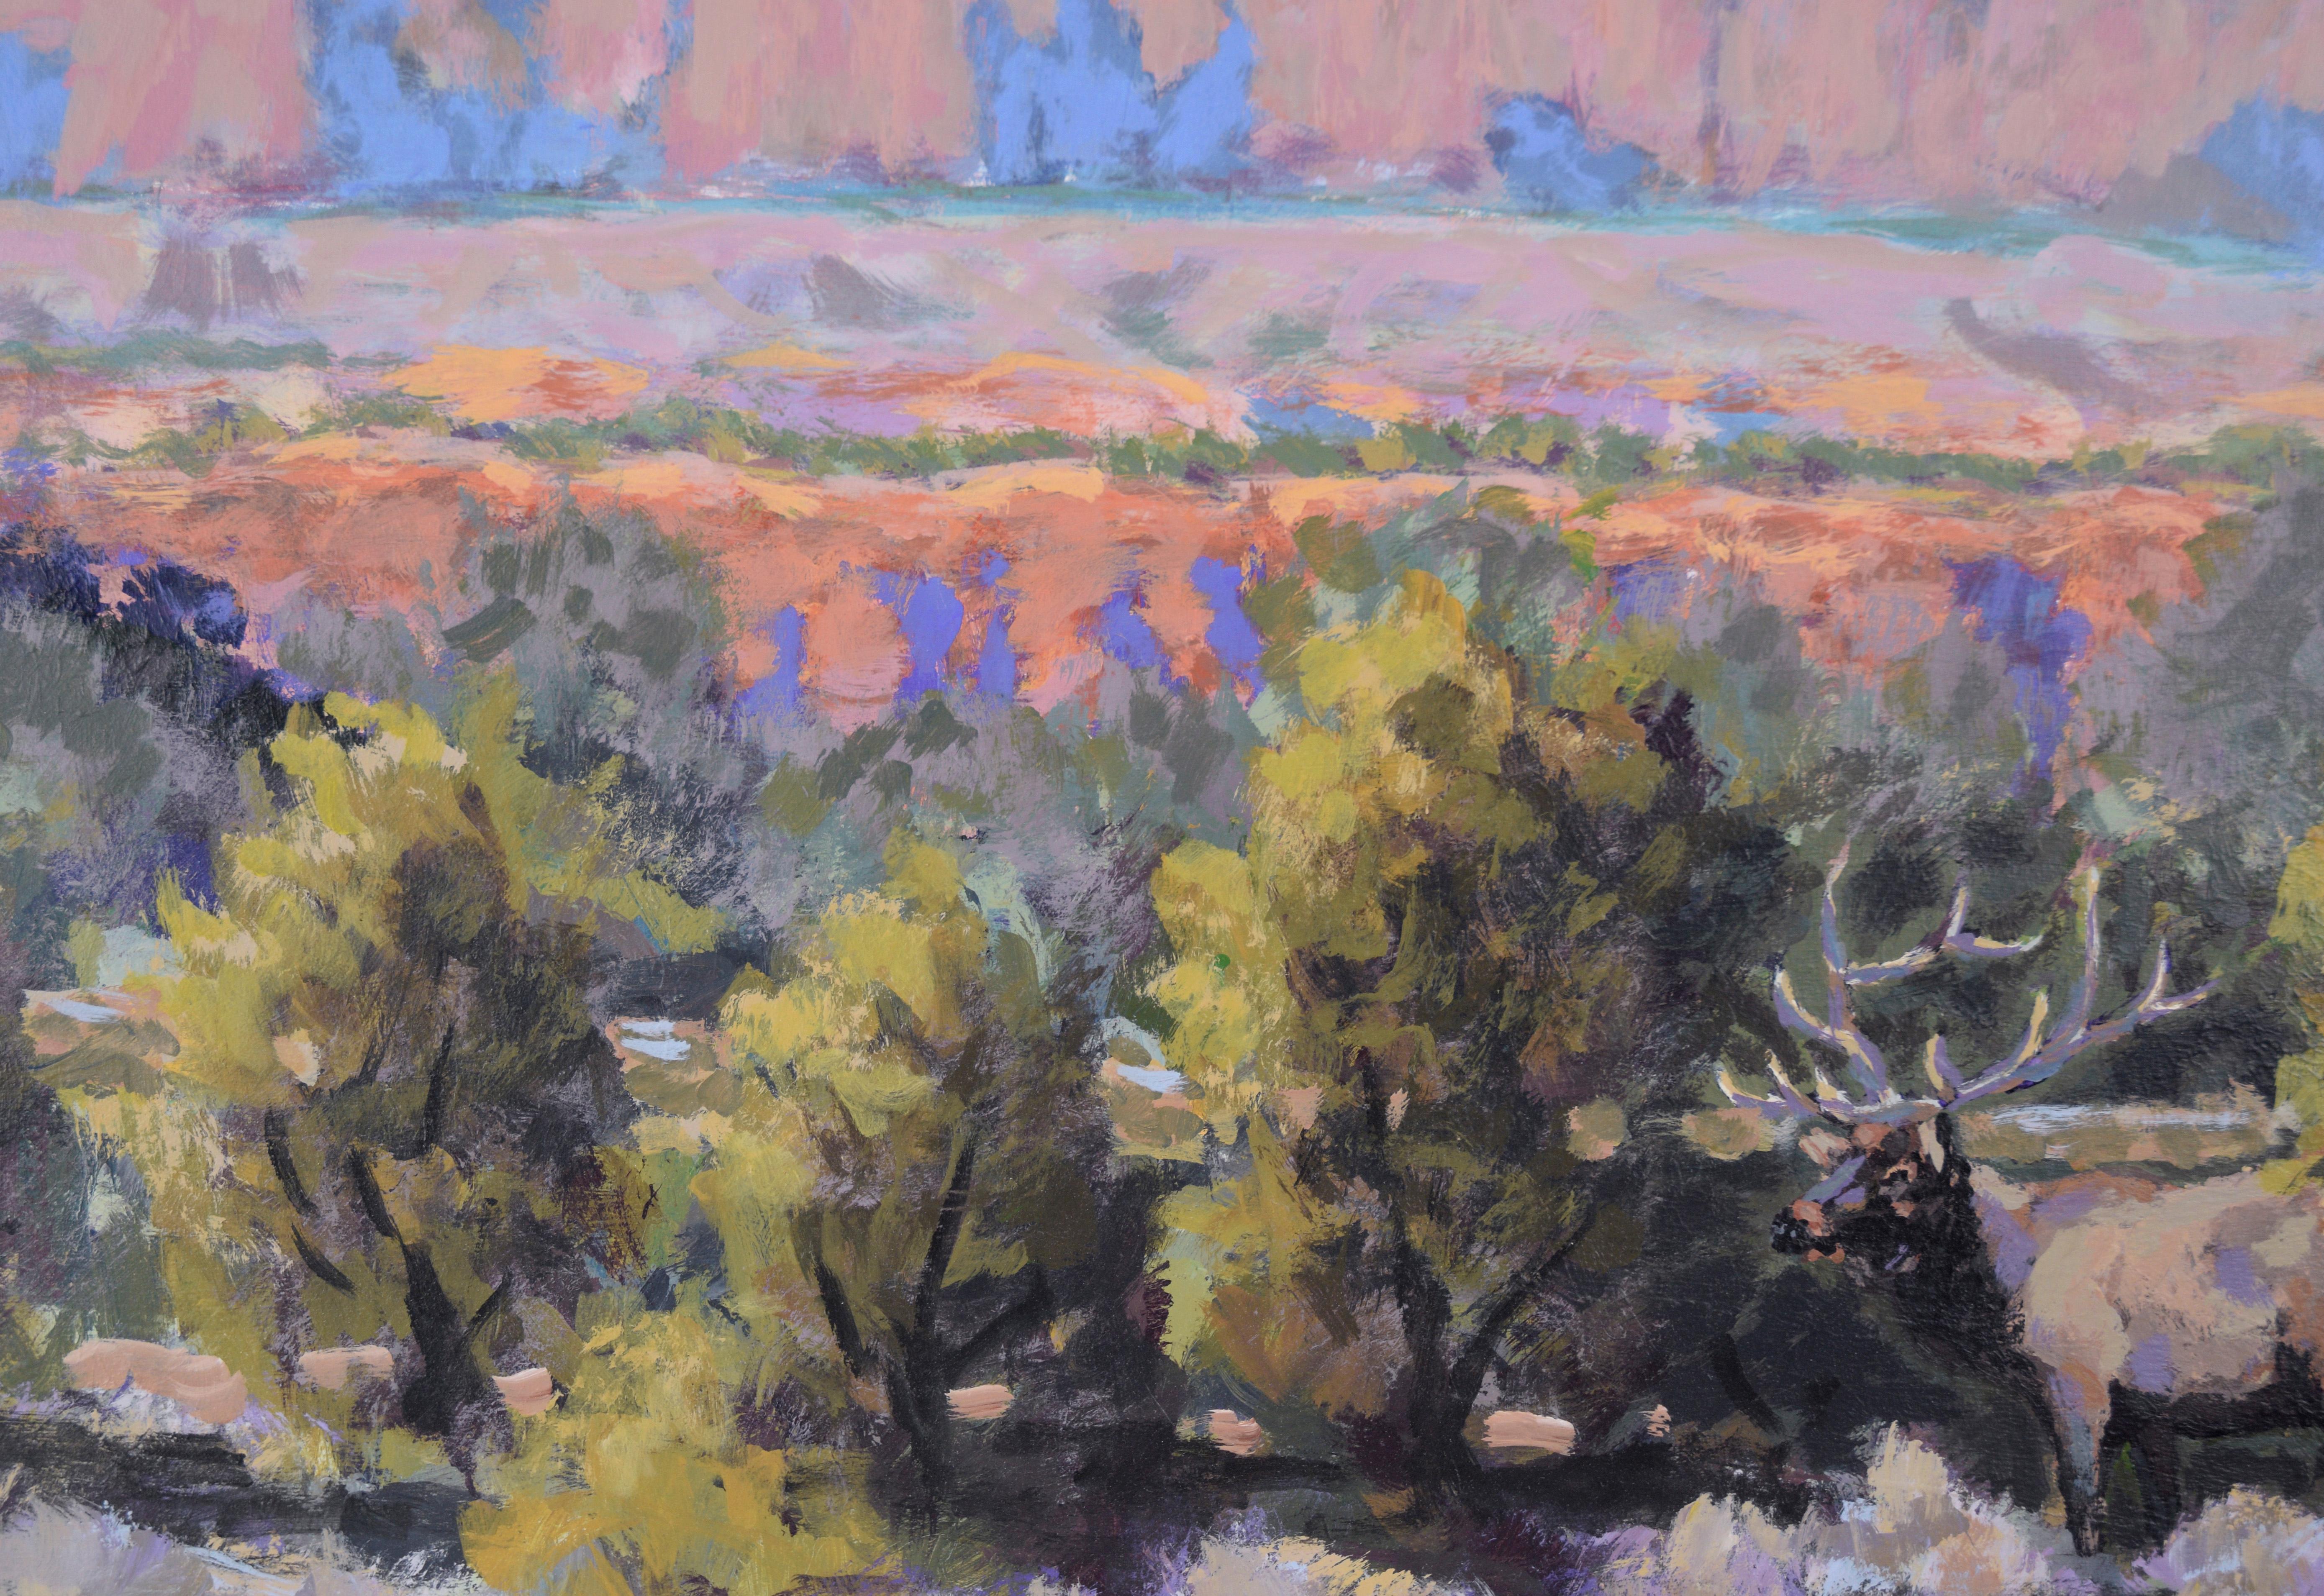 Red Cliffs in the Desert - Western Plein Aire Landscape in Acrylic on Board 2